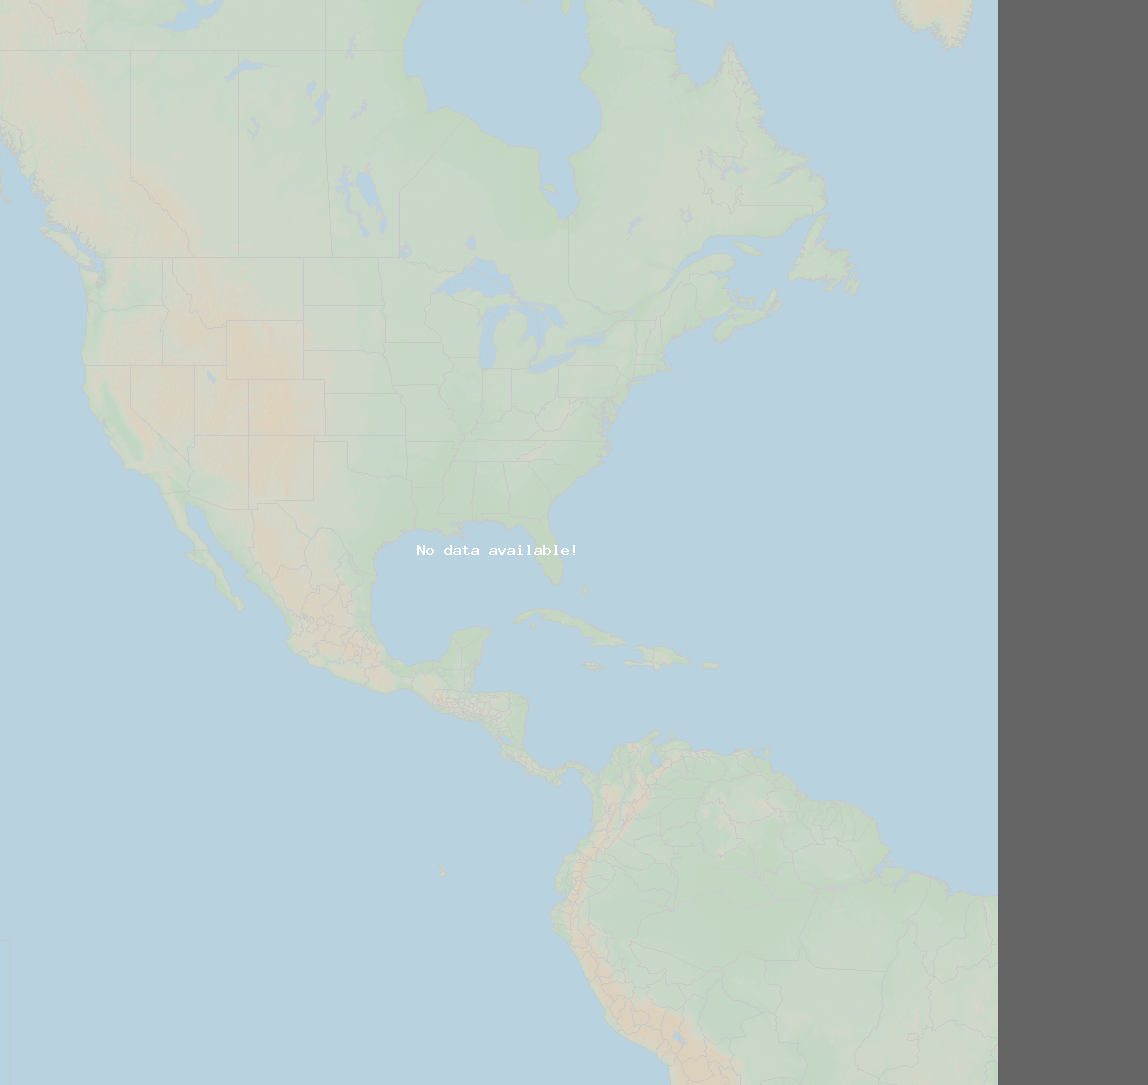 Andel blixtar (Station Calvert Island, BC) North America 2021 